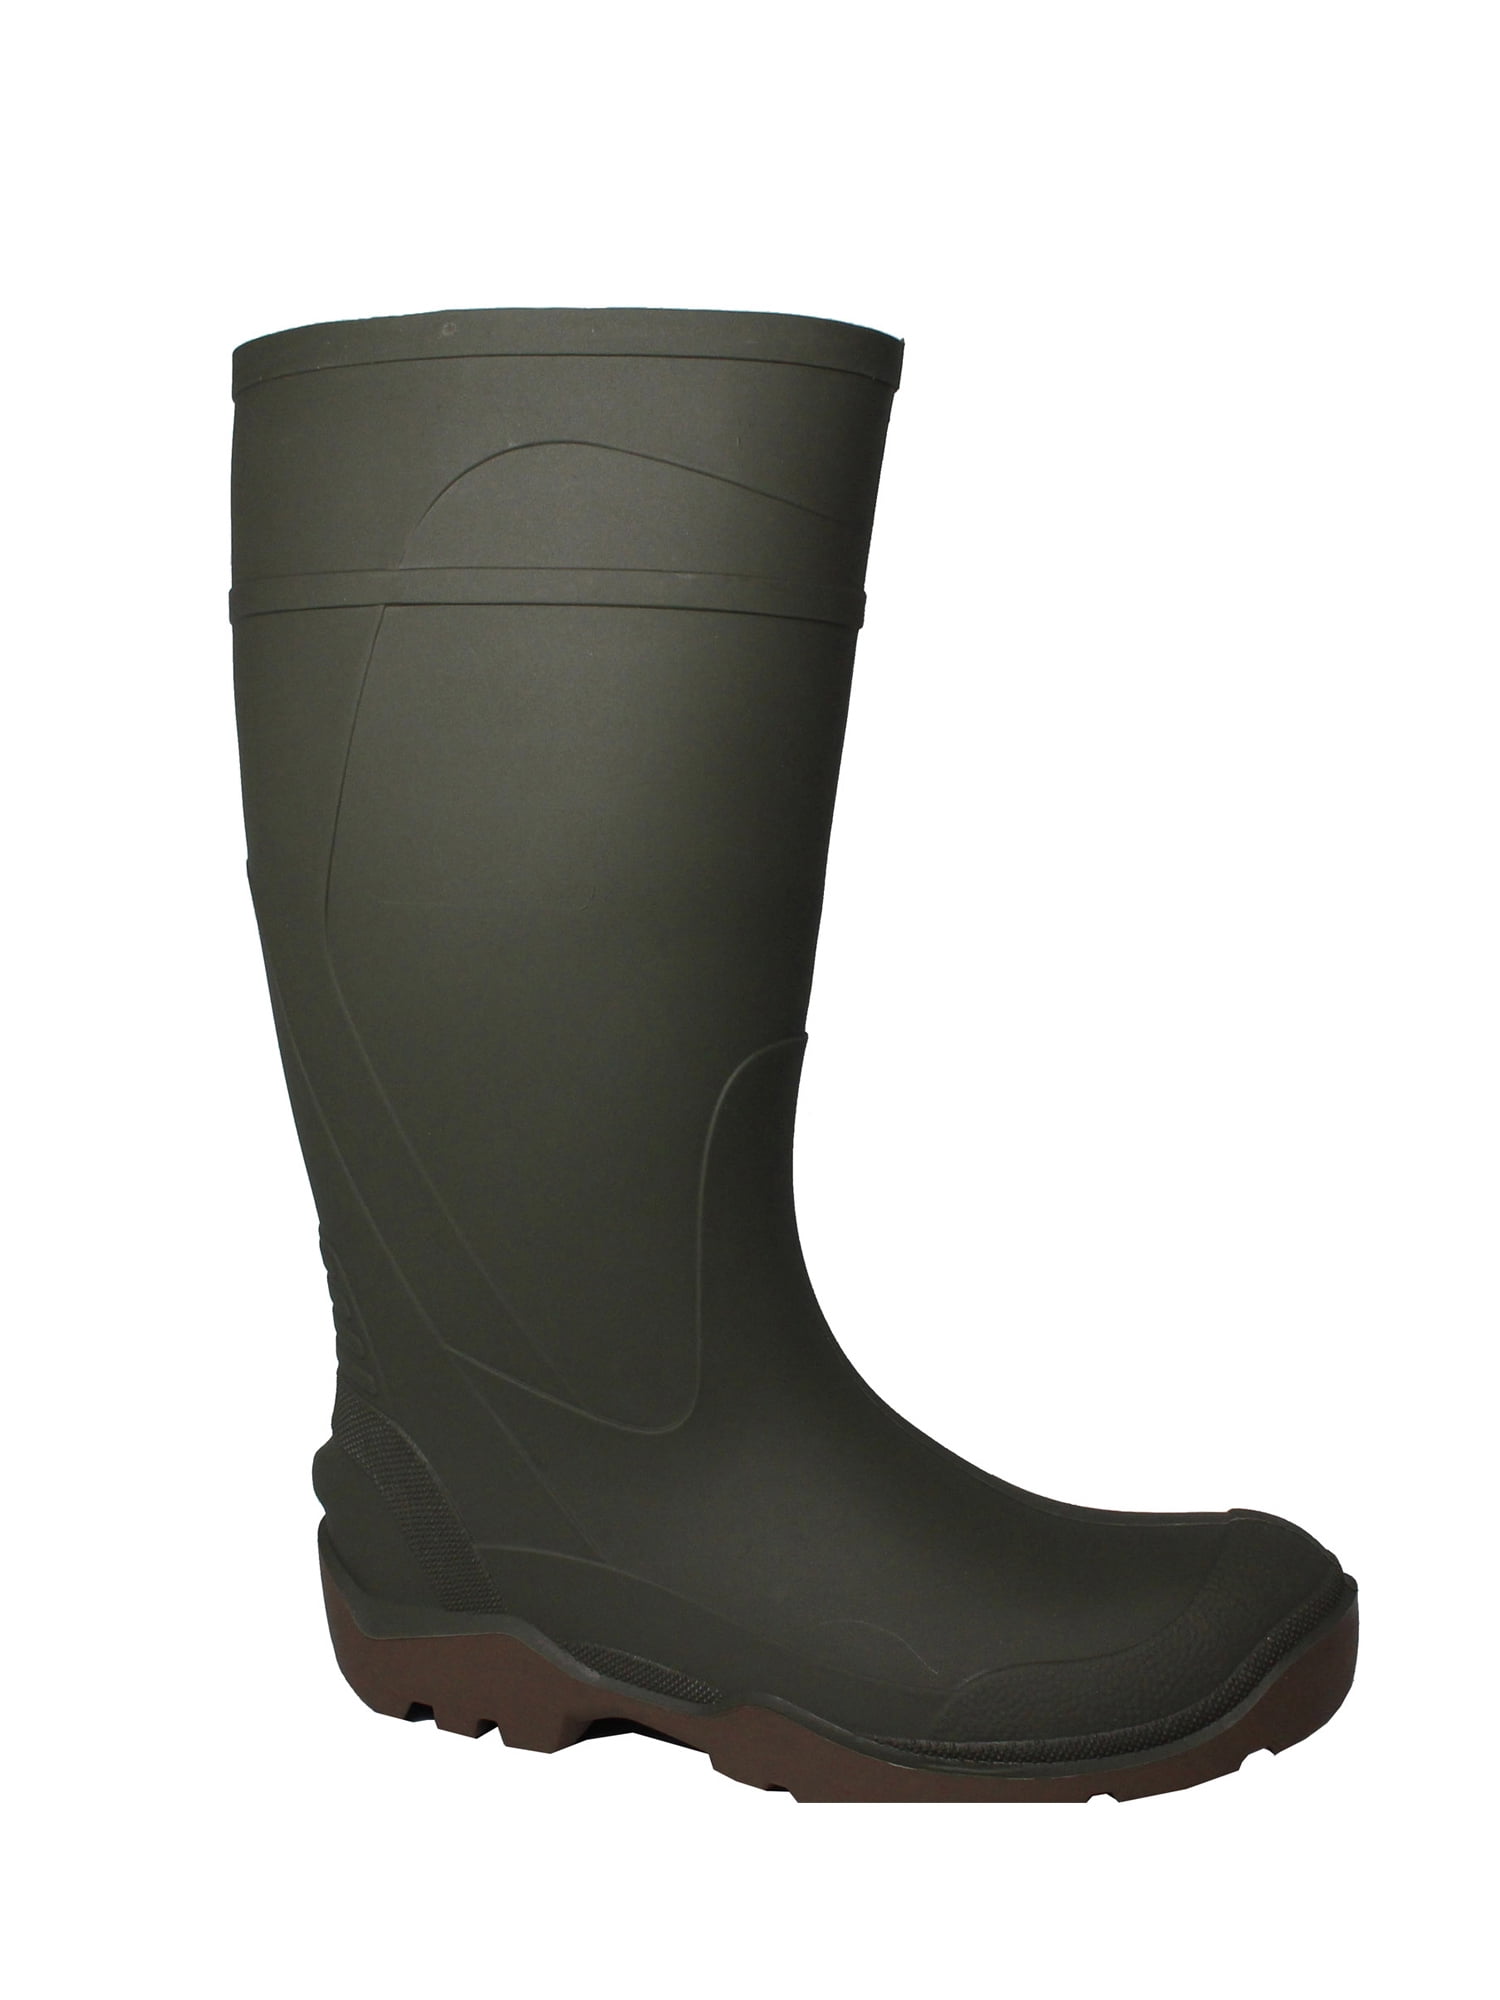 waterproof boots at walmart